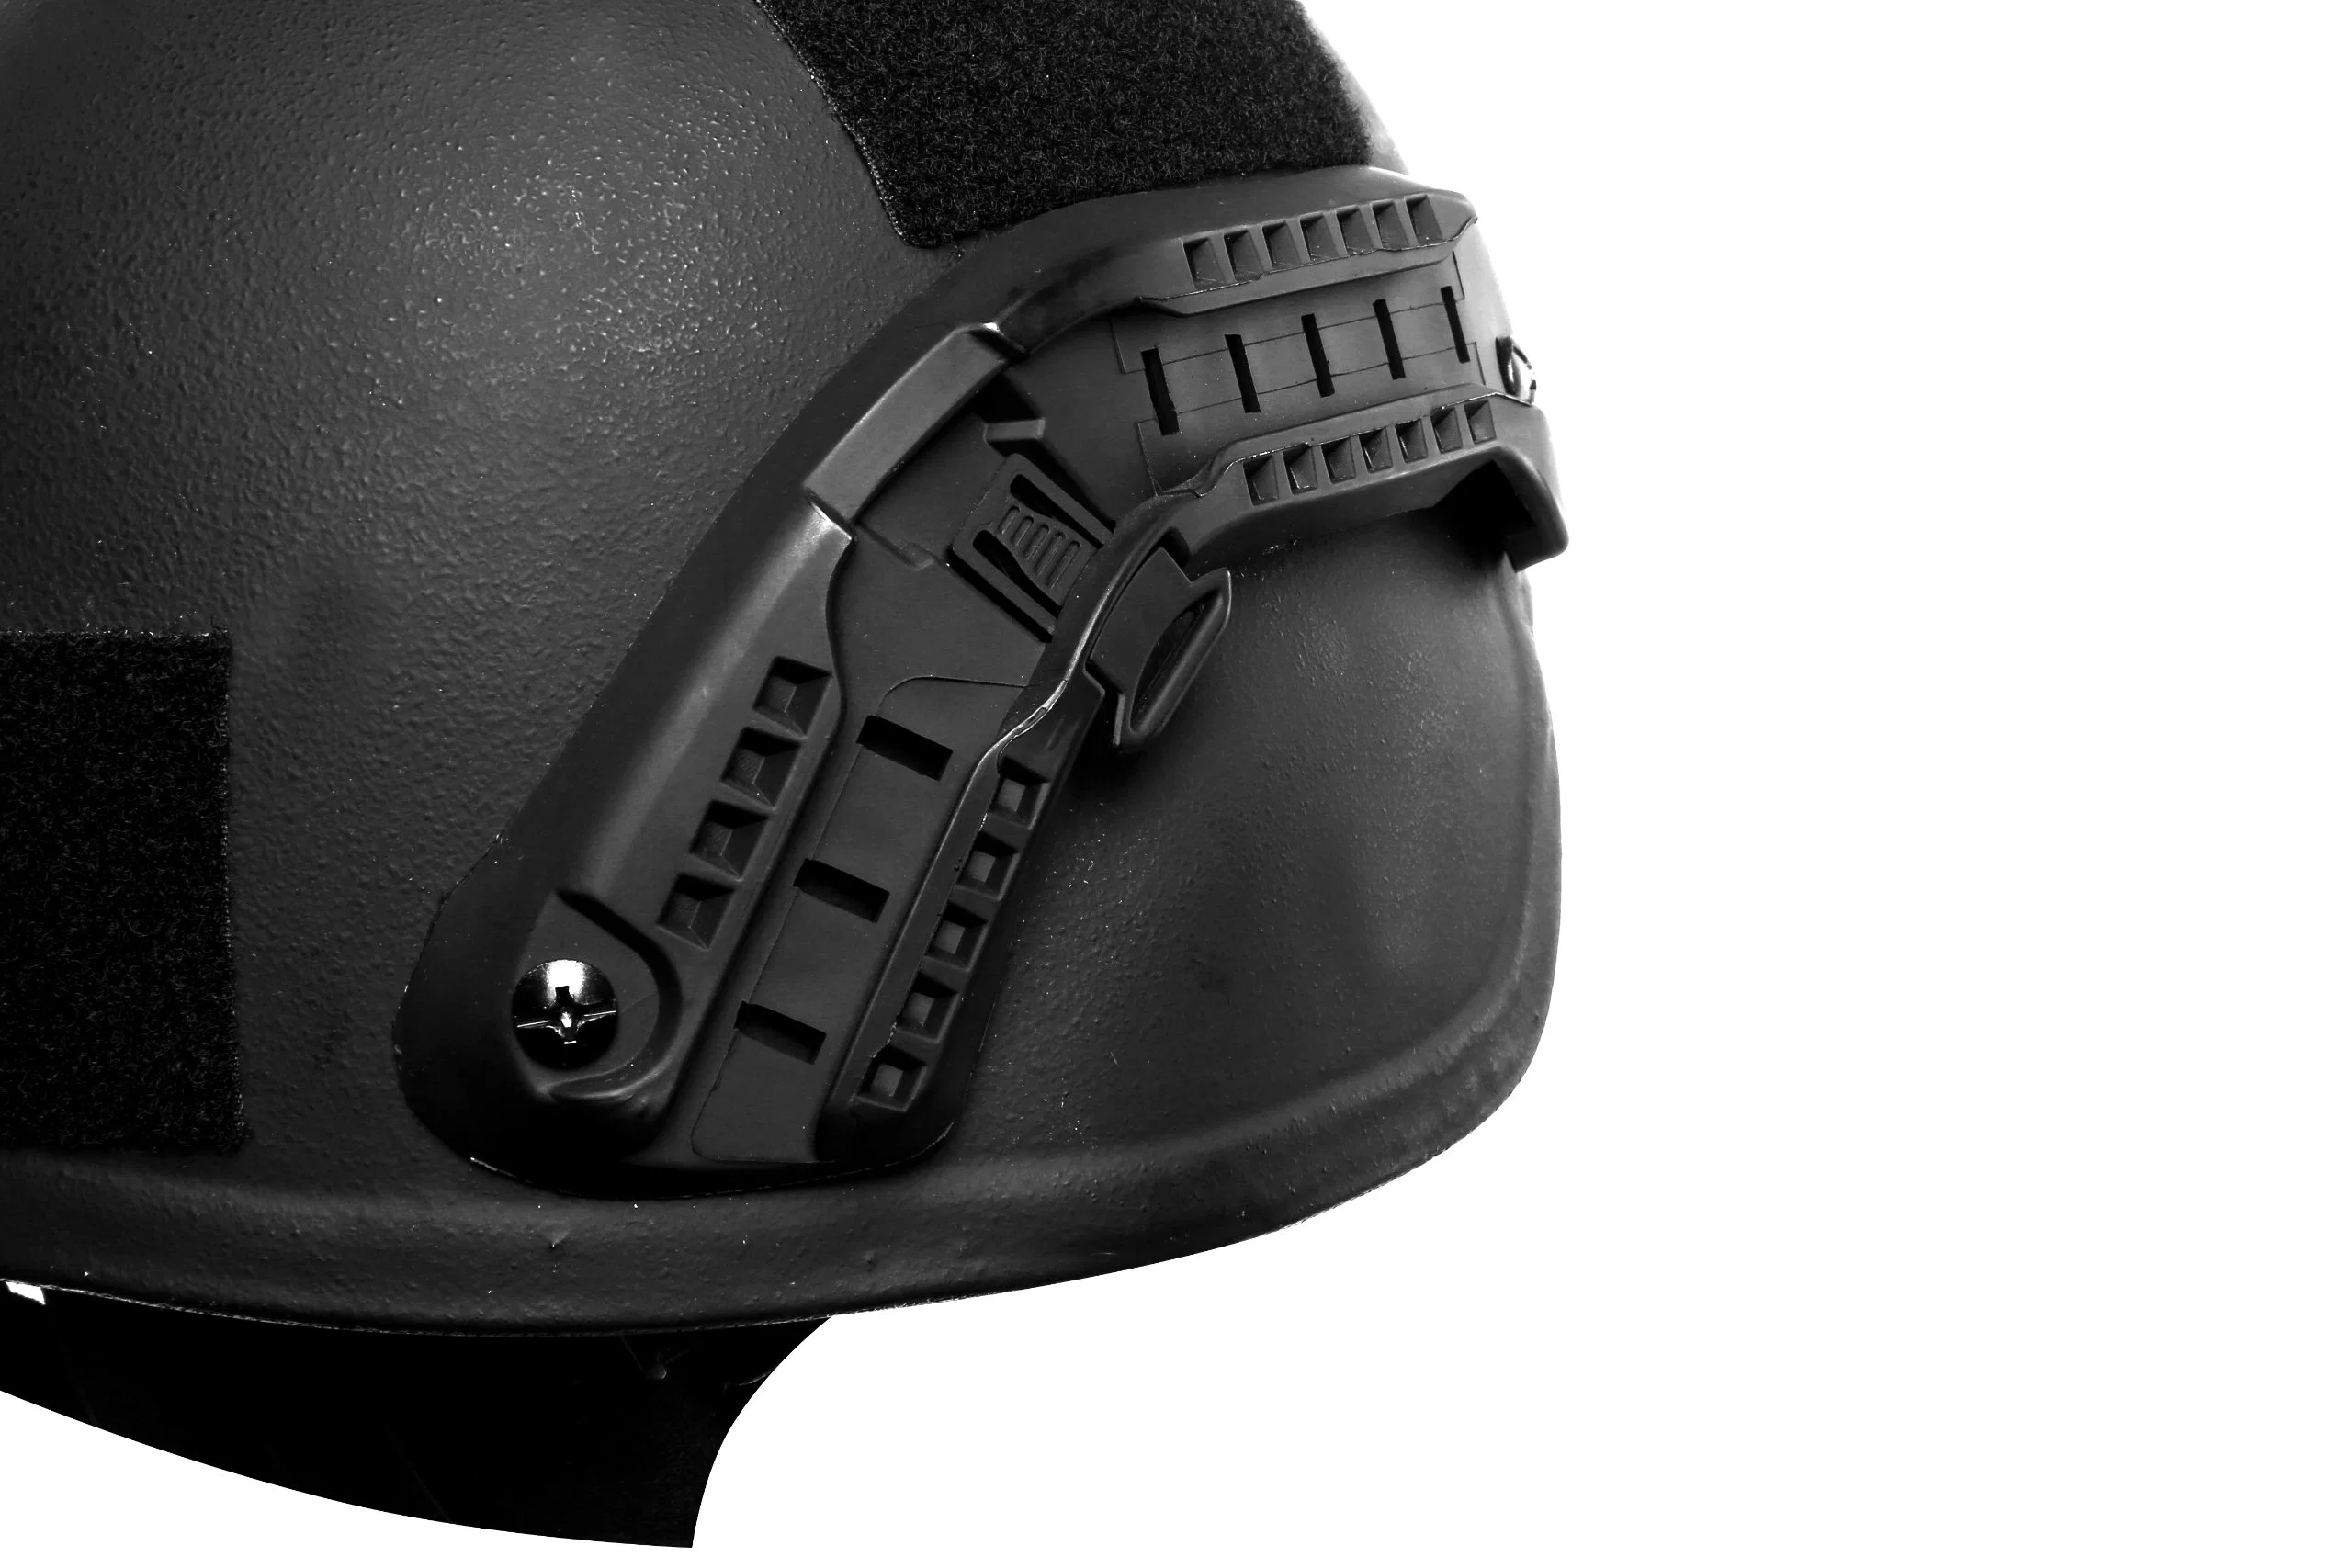 Protective Helmet UHMWPE / Aramid Tactical Safety Helmet for Battleground